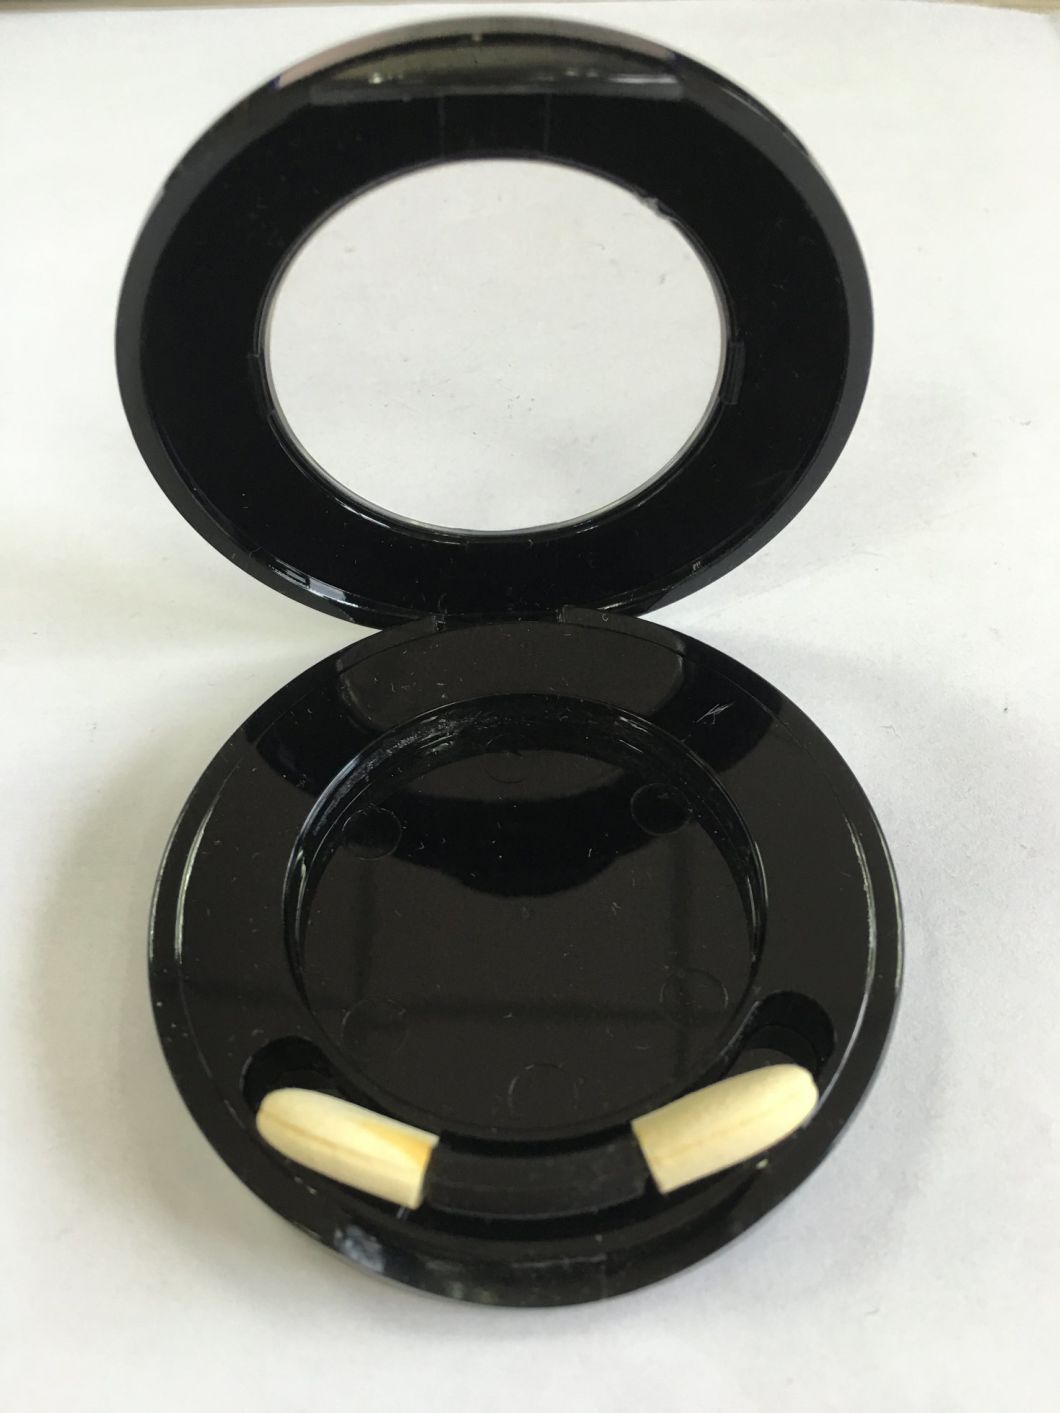 Round Plastic Blush Compact Case